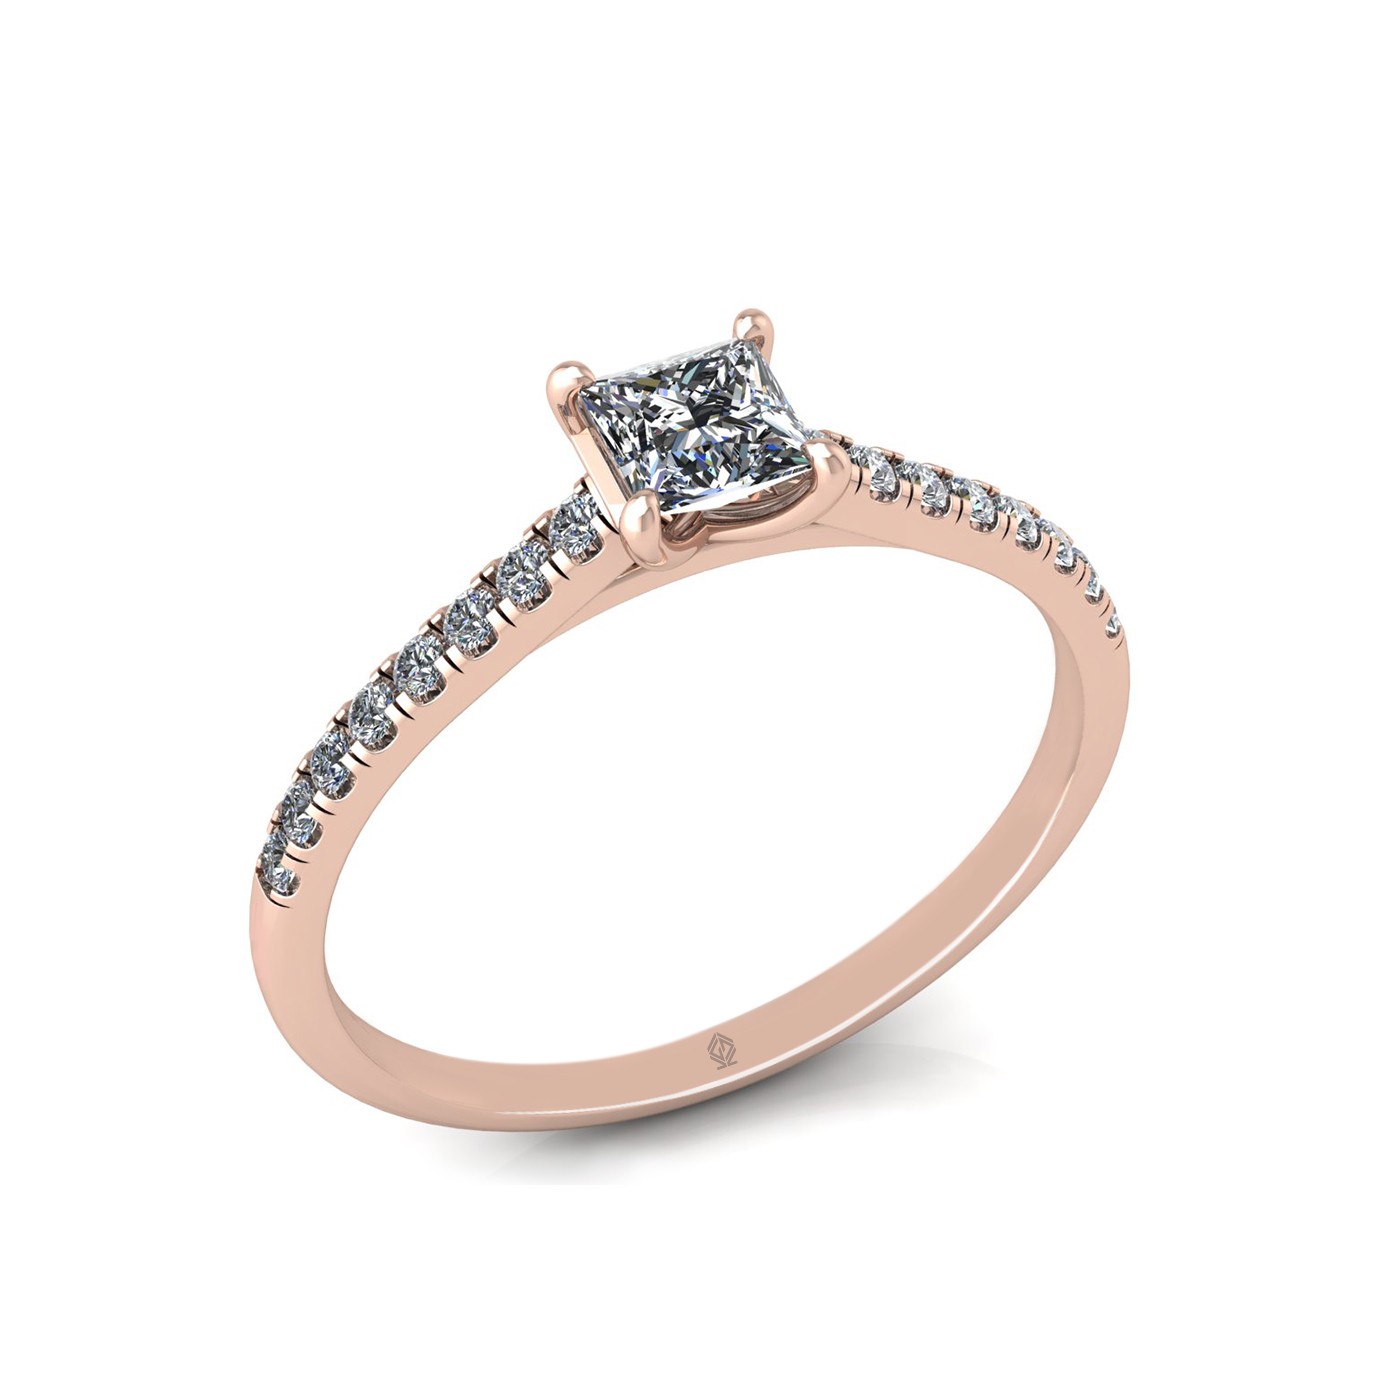 18k rose gold  0,30 ct 4 prongs princess cut diamond engagement ring with whisper thin pavÉ set band